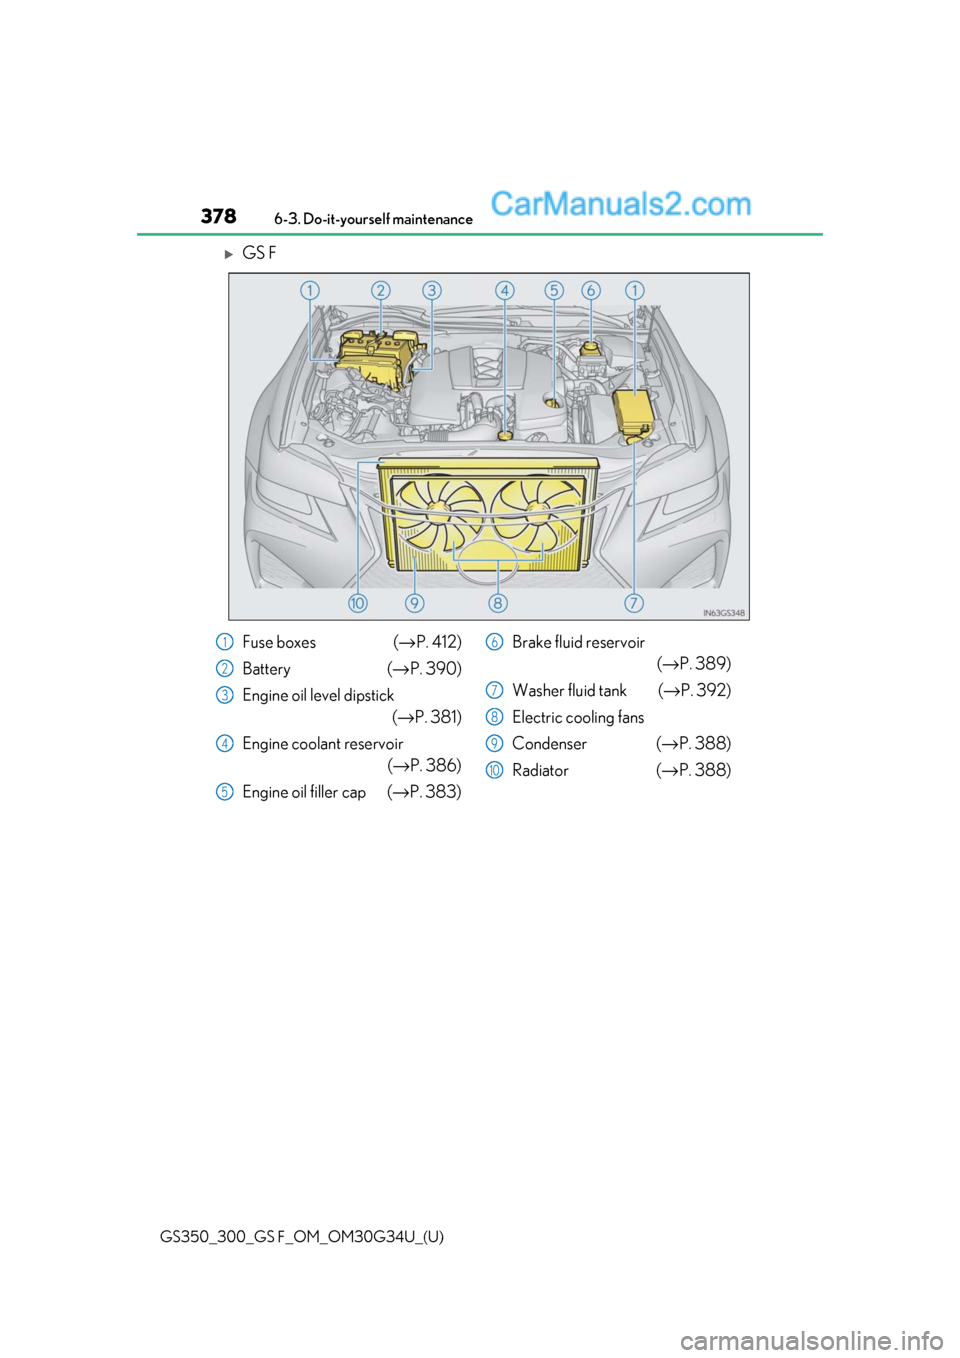 Lexus GS300 2018  Owners Manuals 378
GS350_300_GS F_OM_OM30G34U_(U)6-3. Do-it-yourself maintenance
GS F
Fuse boxes (→
P. 412)
Battery ( →P. 390)
Engine oil level dipstick (→P. 381)
Engine coolant reservoir (→P. 386)
Engine